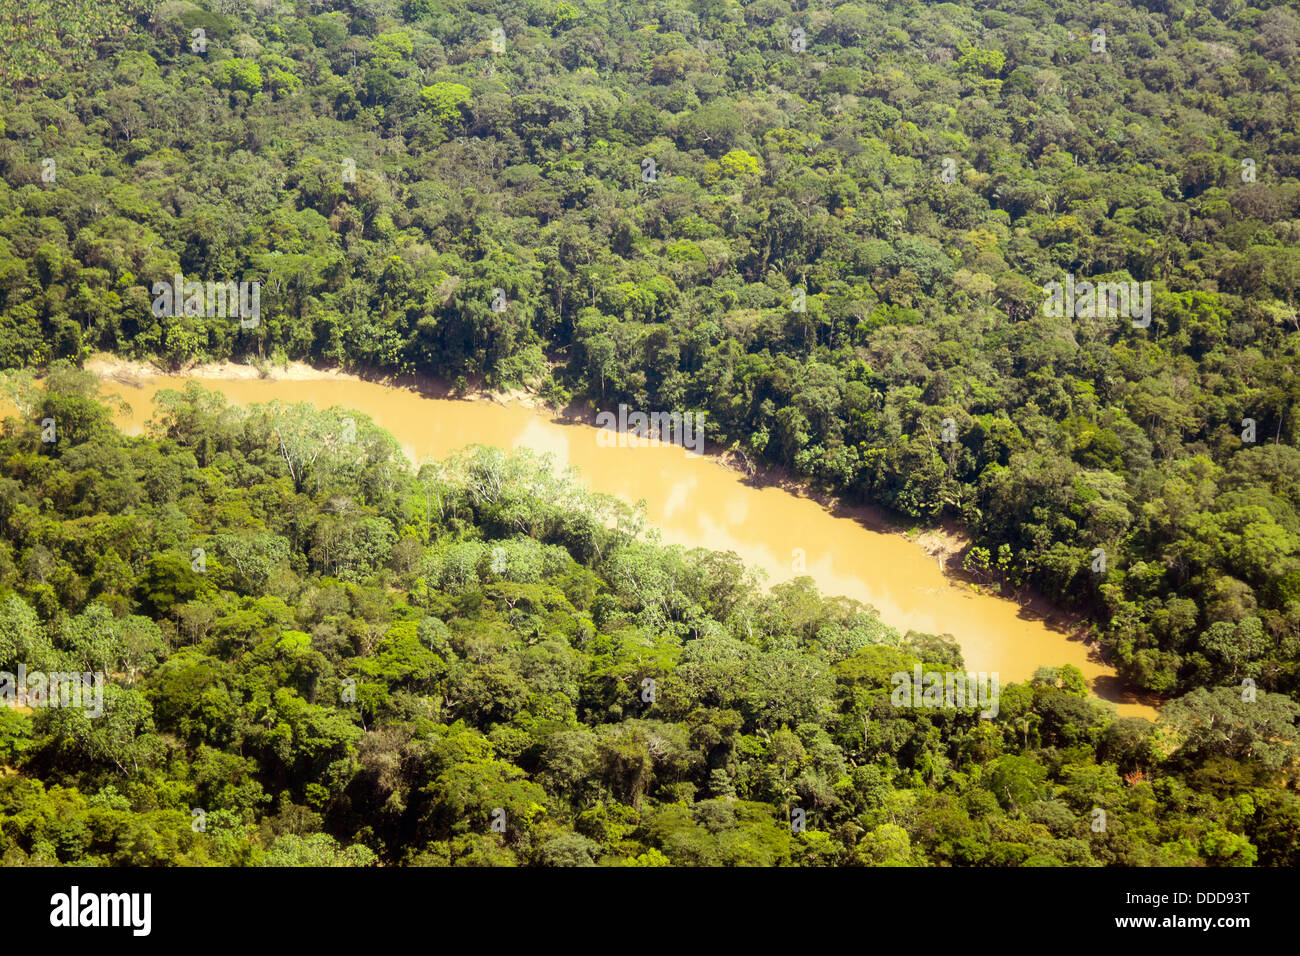 The Cononaco river in the Ecuadorian Amazon from the air Stock Photo